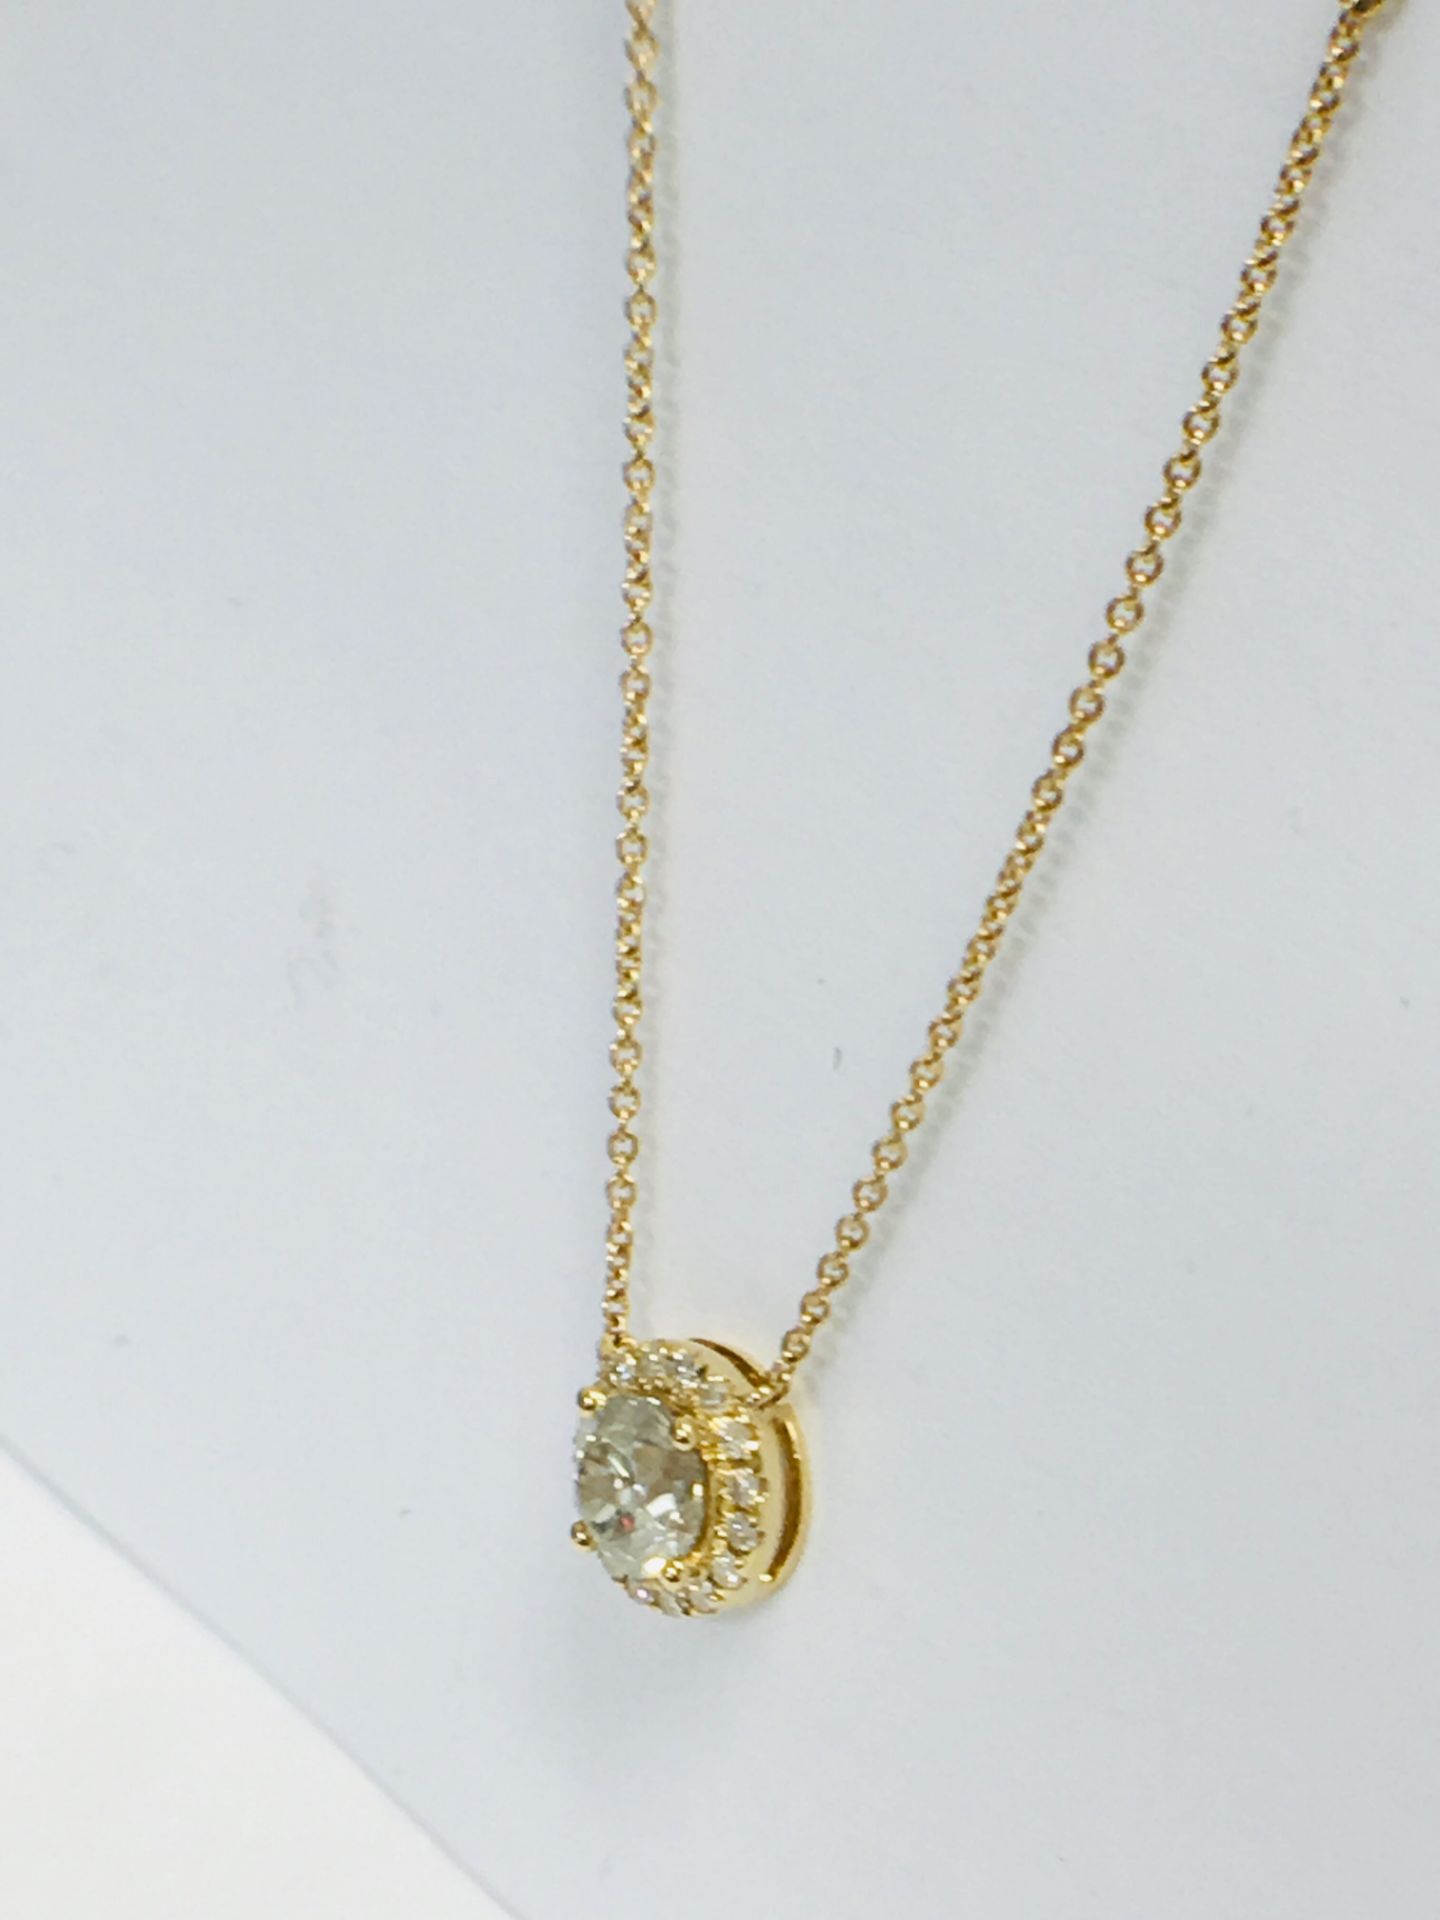 18ct Yellow Gold Diamond Necklace tdw - Image 7 of 10